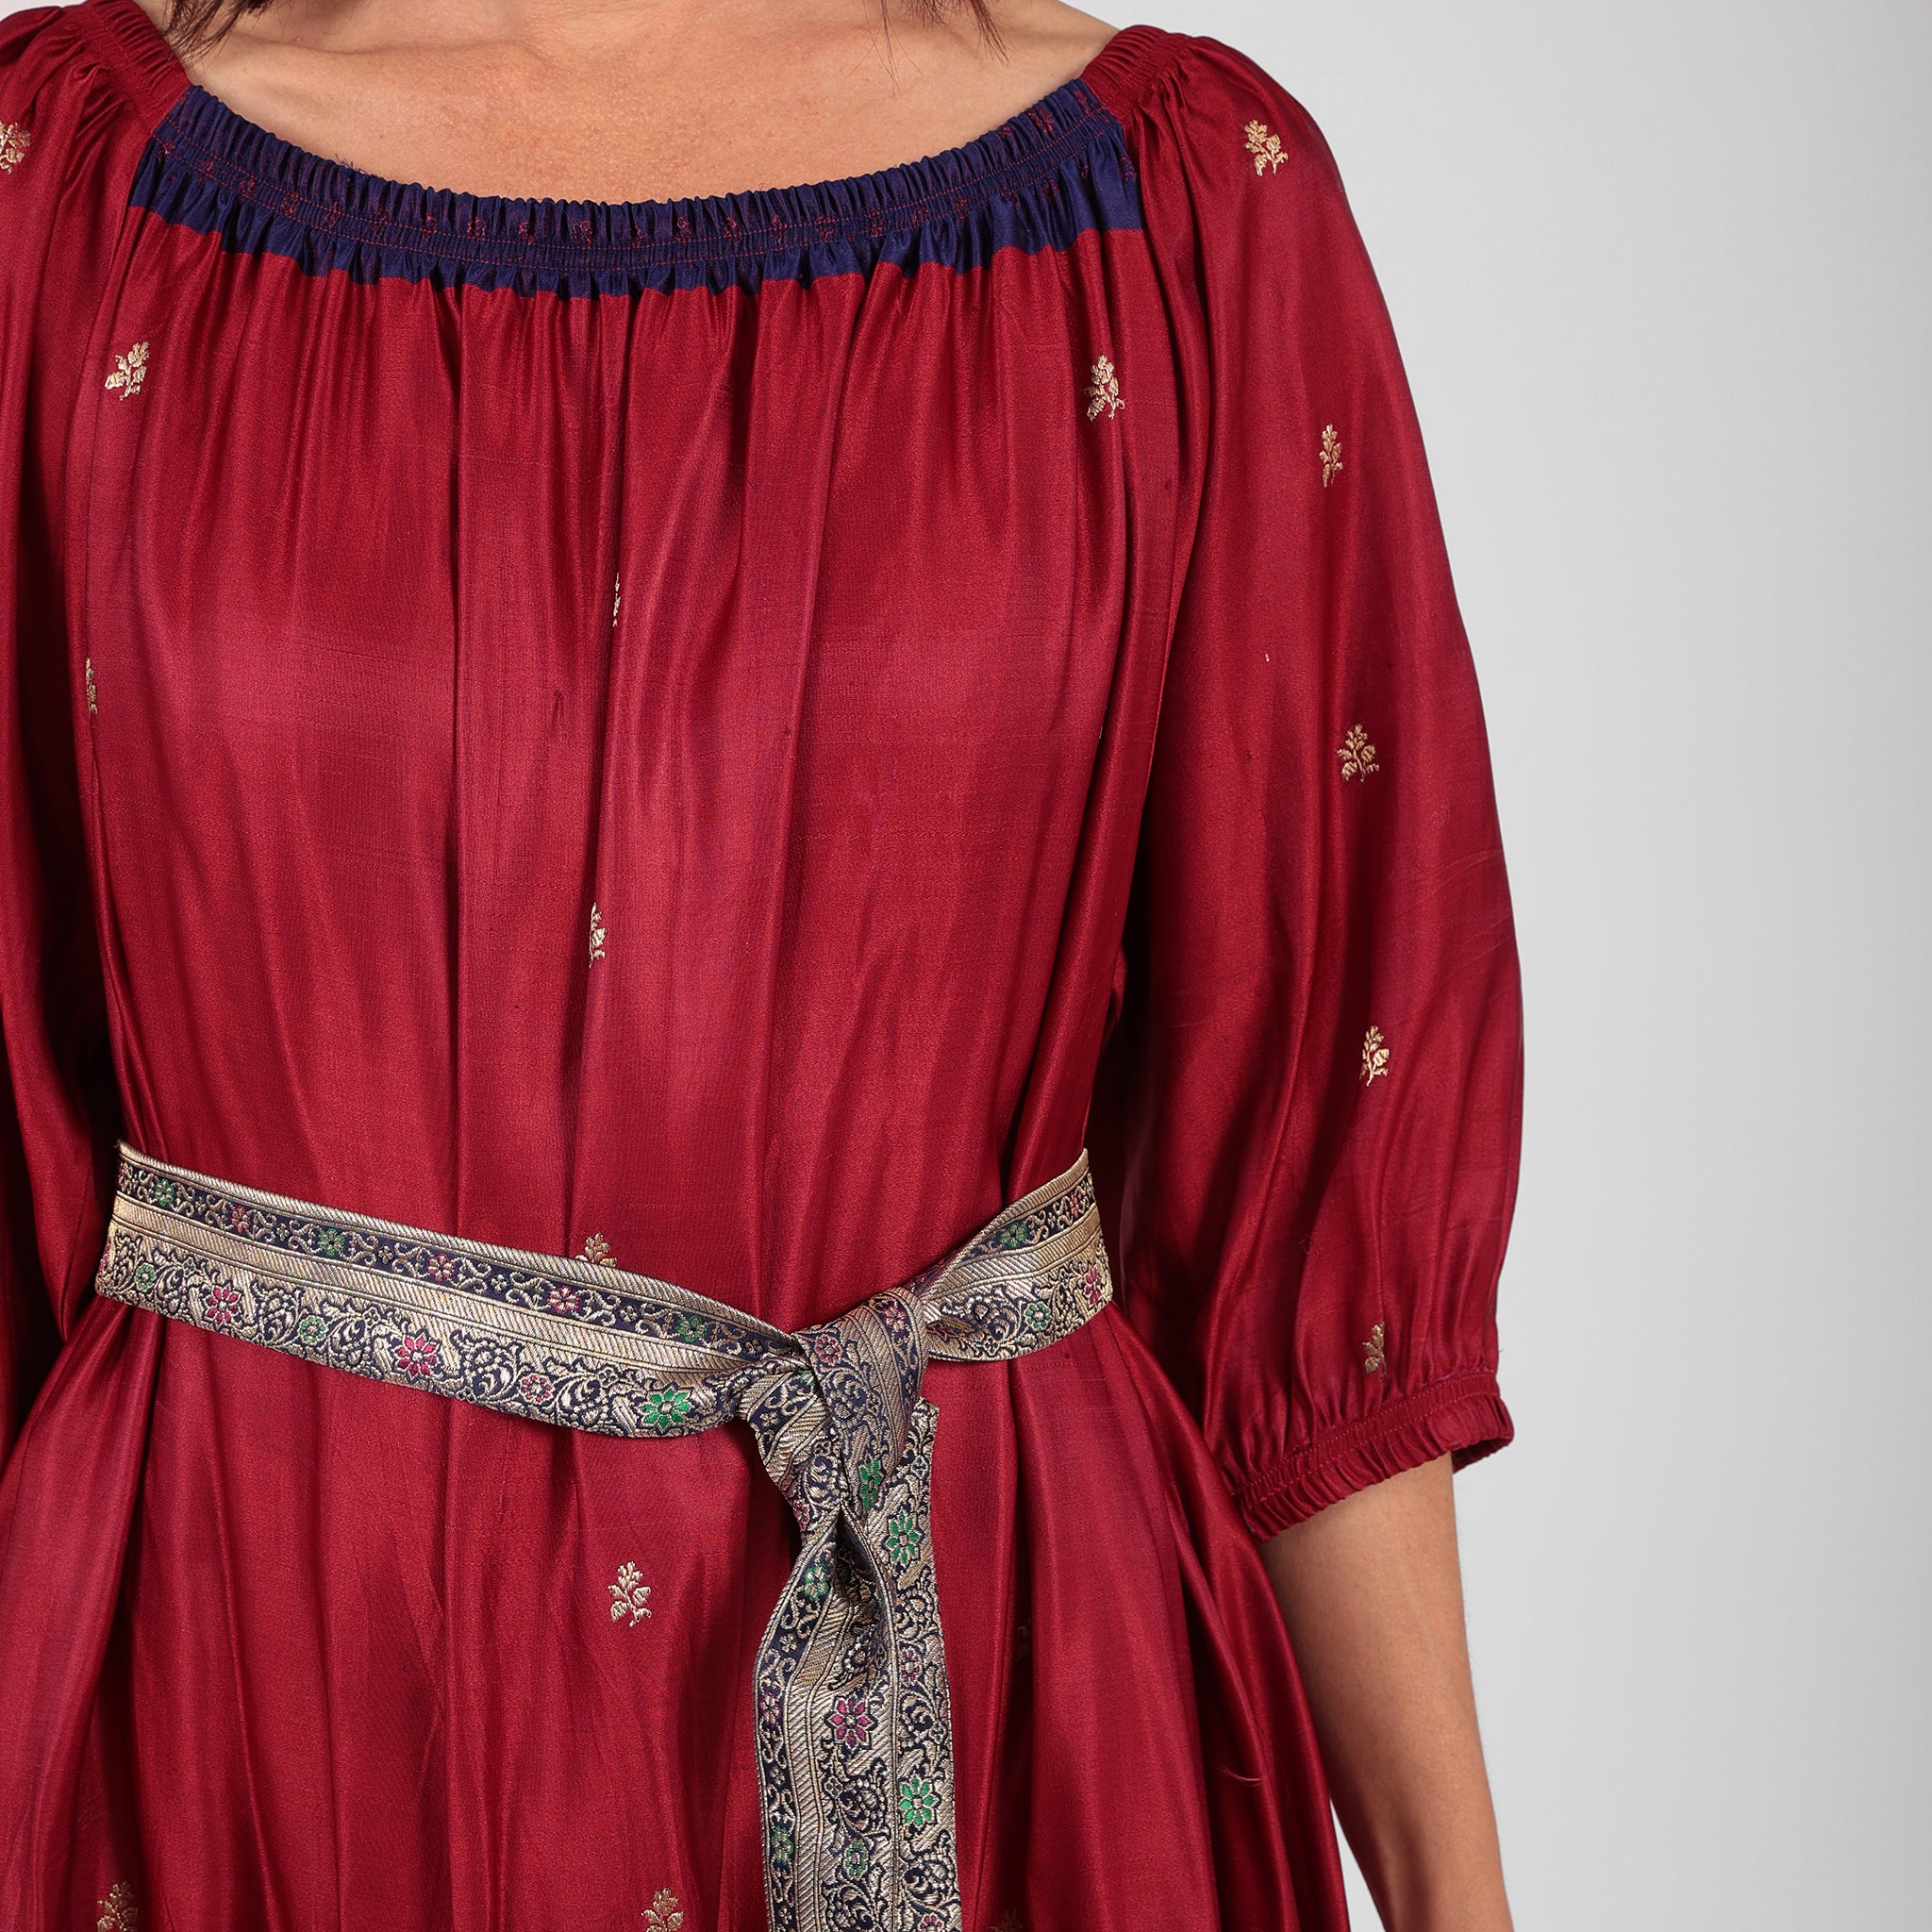 Ausus Ruby Red Vintage silk sari maxi dress close up